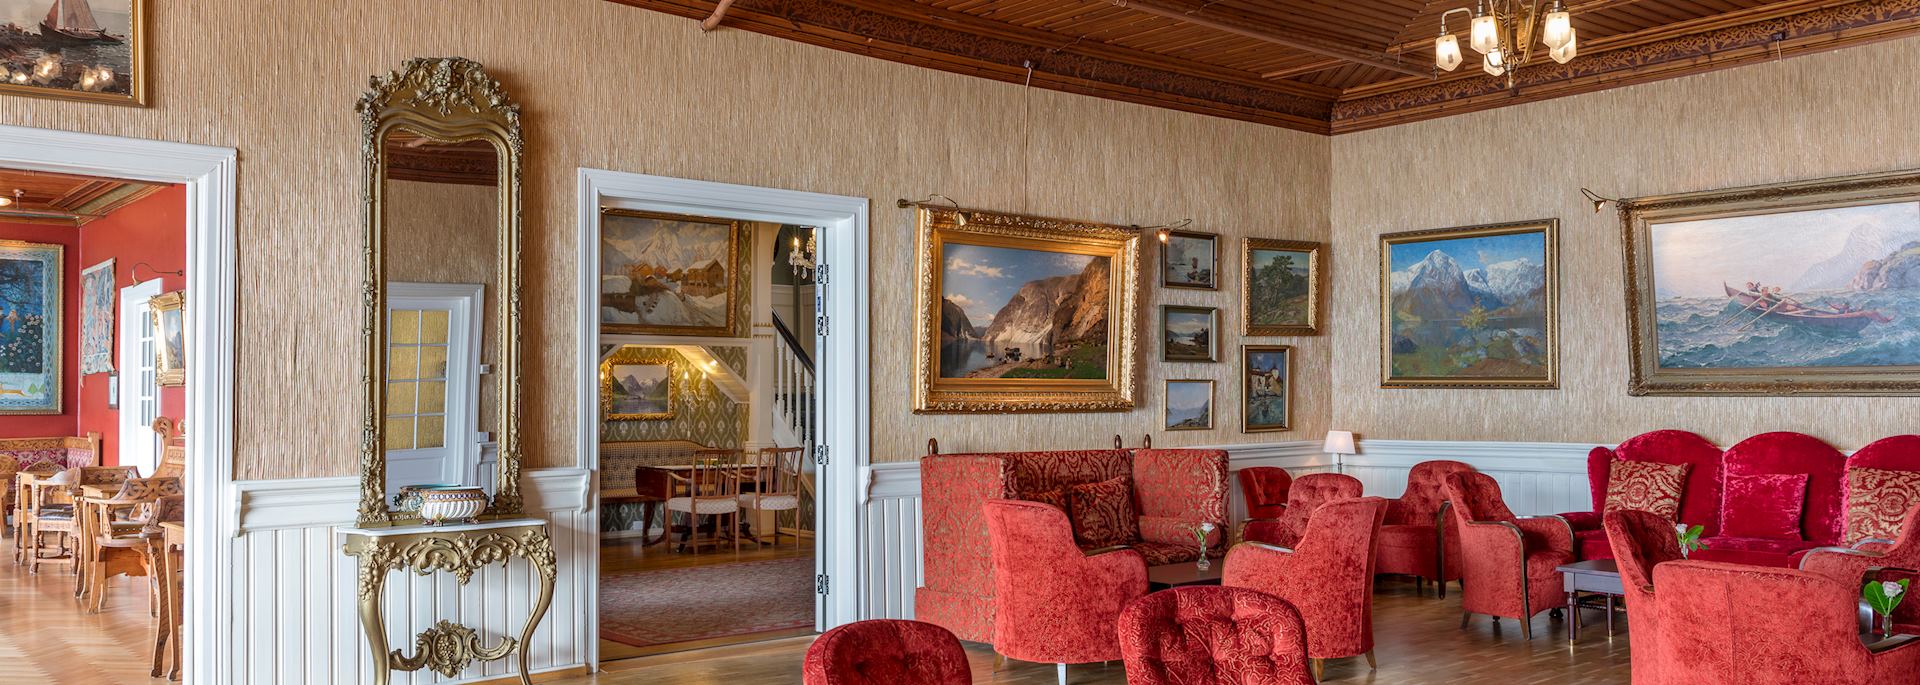 Kviknes Hotel, Norway